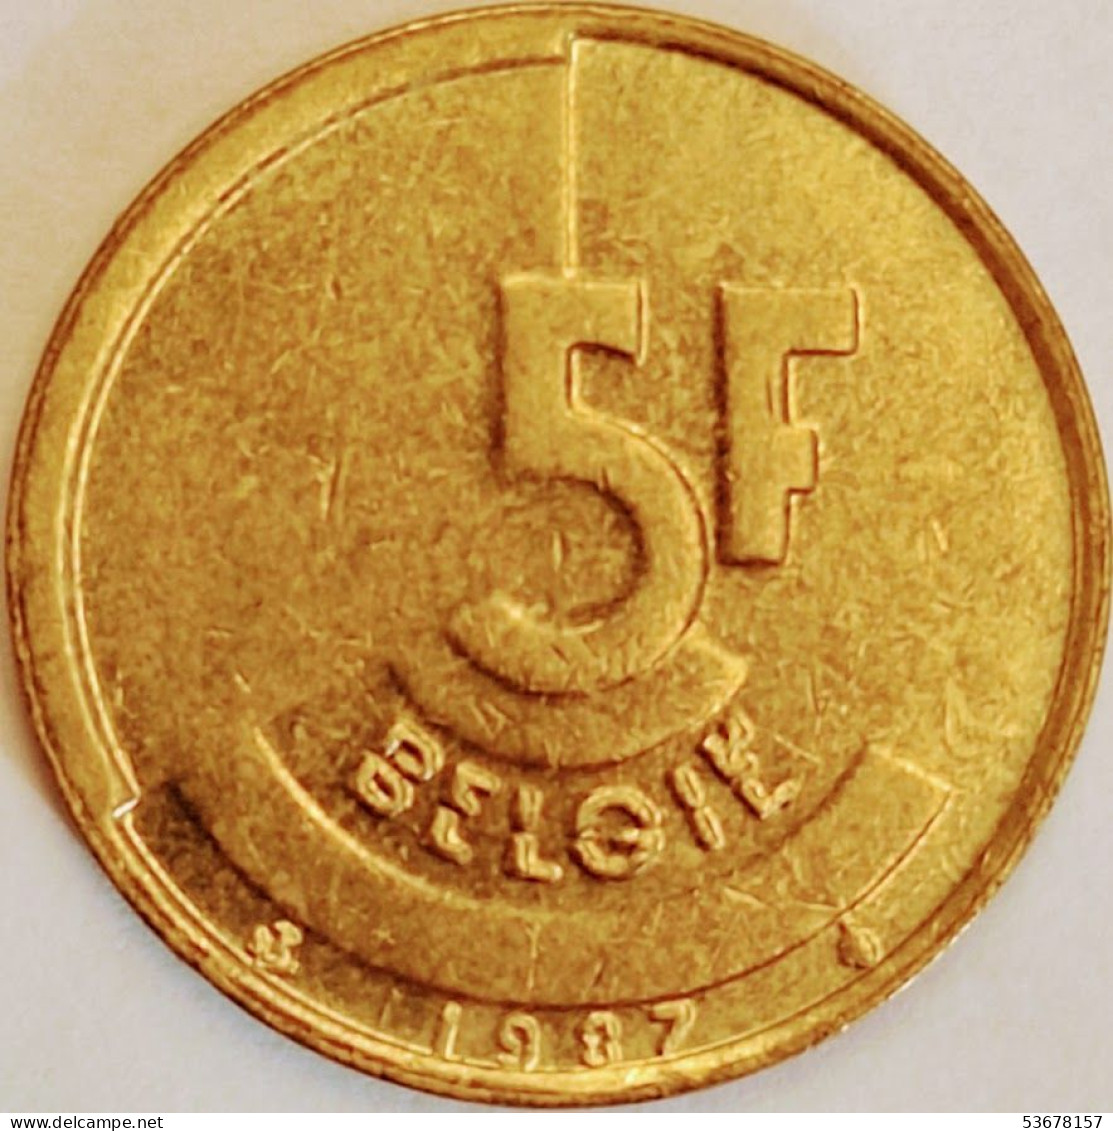 Belgium - 5 Francs 1987, KM# 164 (#3195) - 5 Frank